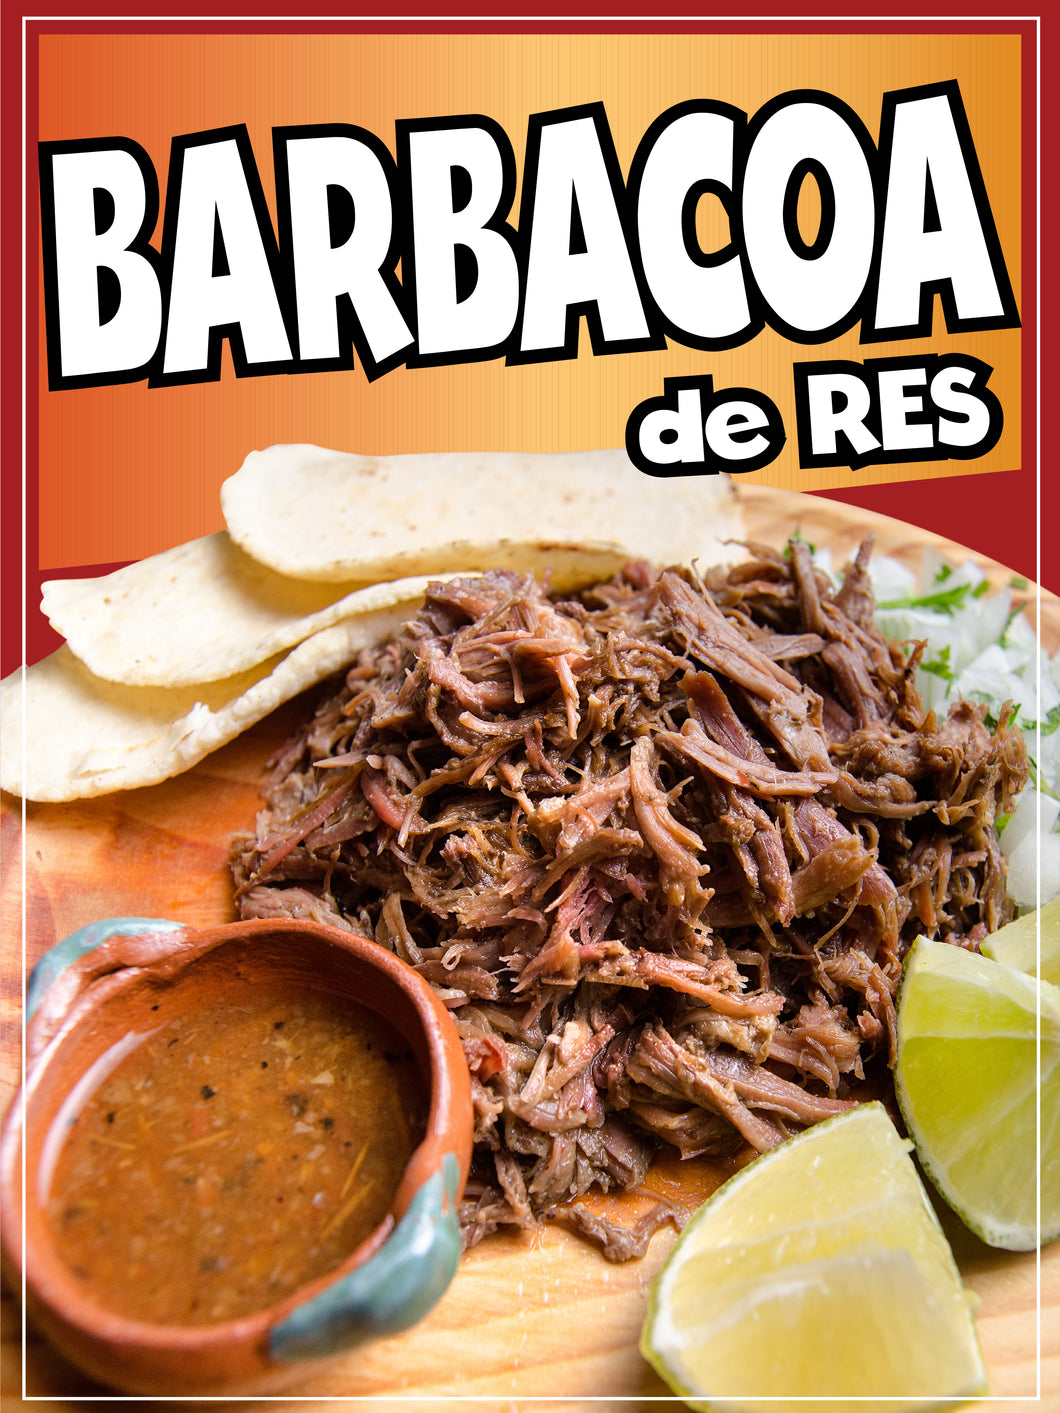 Barbacoa de Res Decal Window Sticker Mexican Food Truck Concession Vinyl Restaurant Beef barbacoa Mexican Food Image Sticker